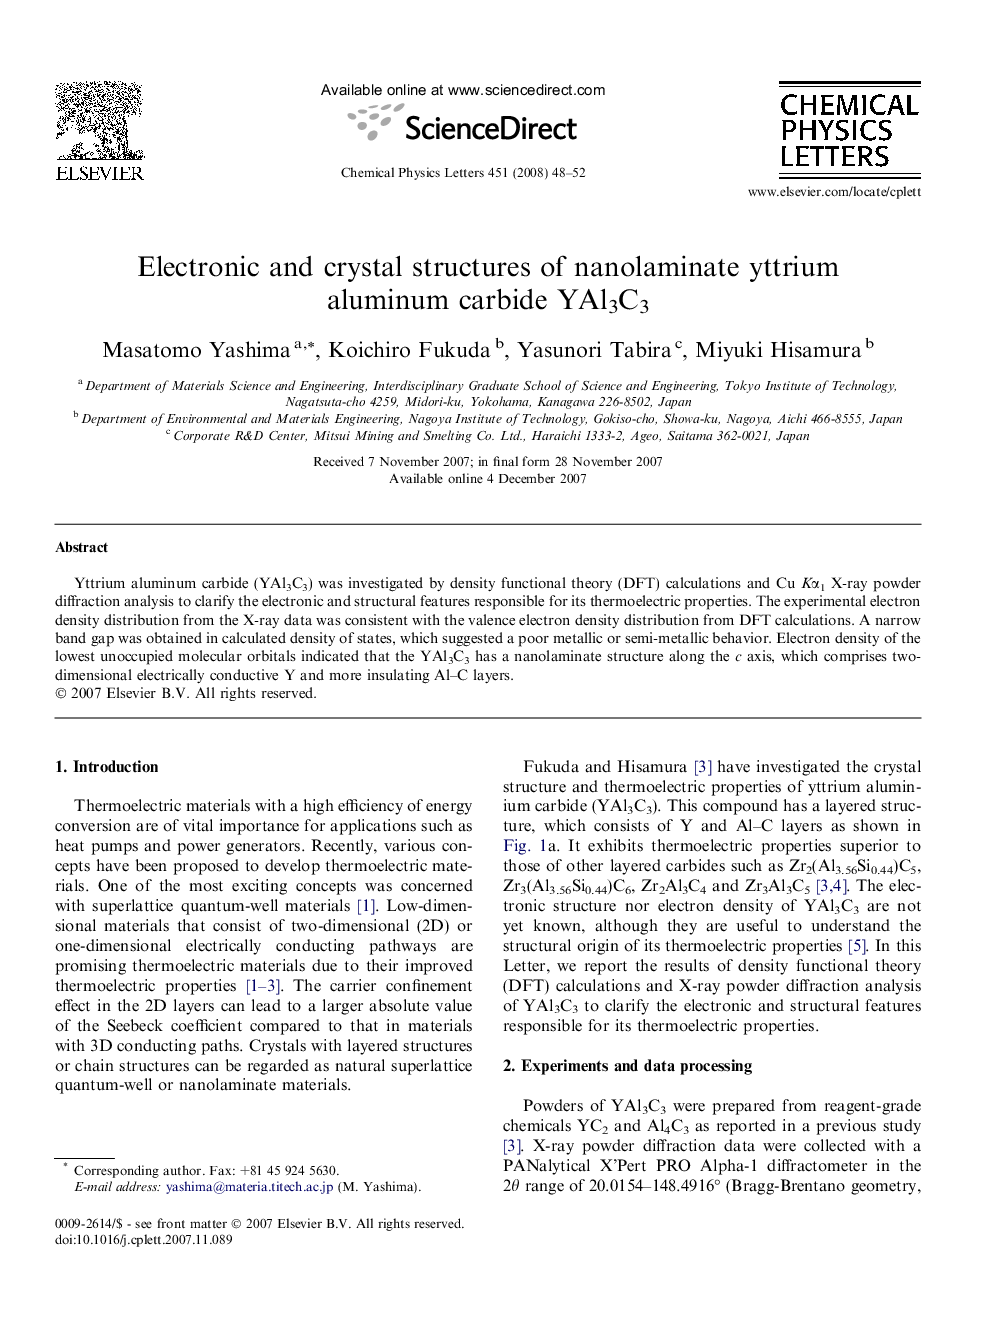 Electronic and crystal structures of nanolaminate yttrium aluminum carbide YAl3C3